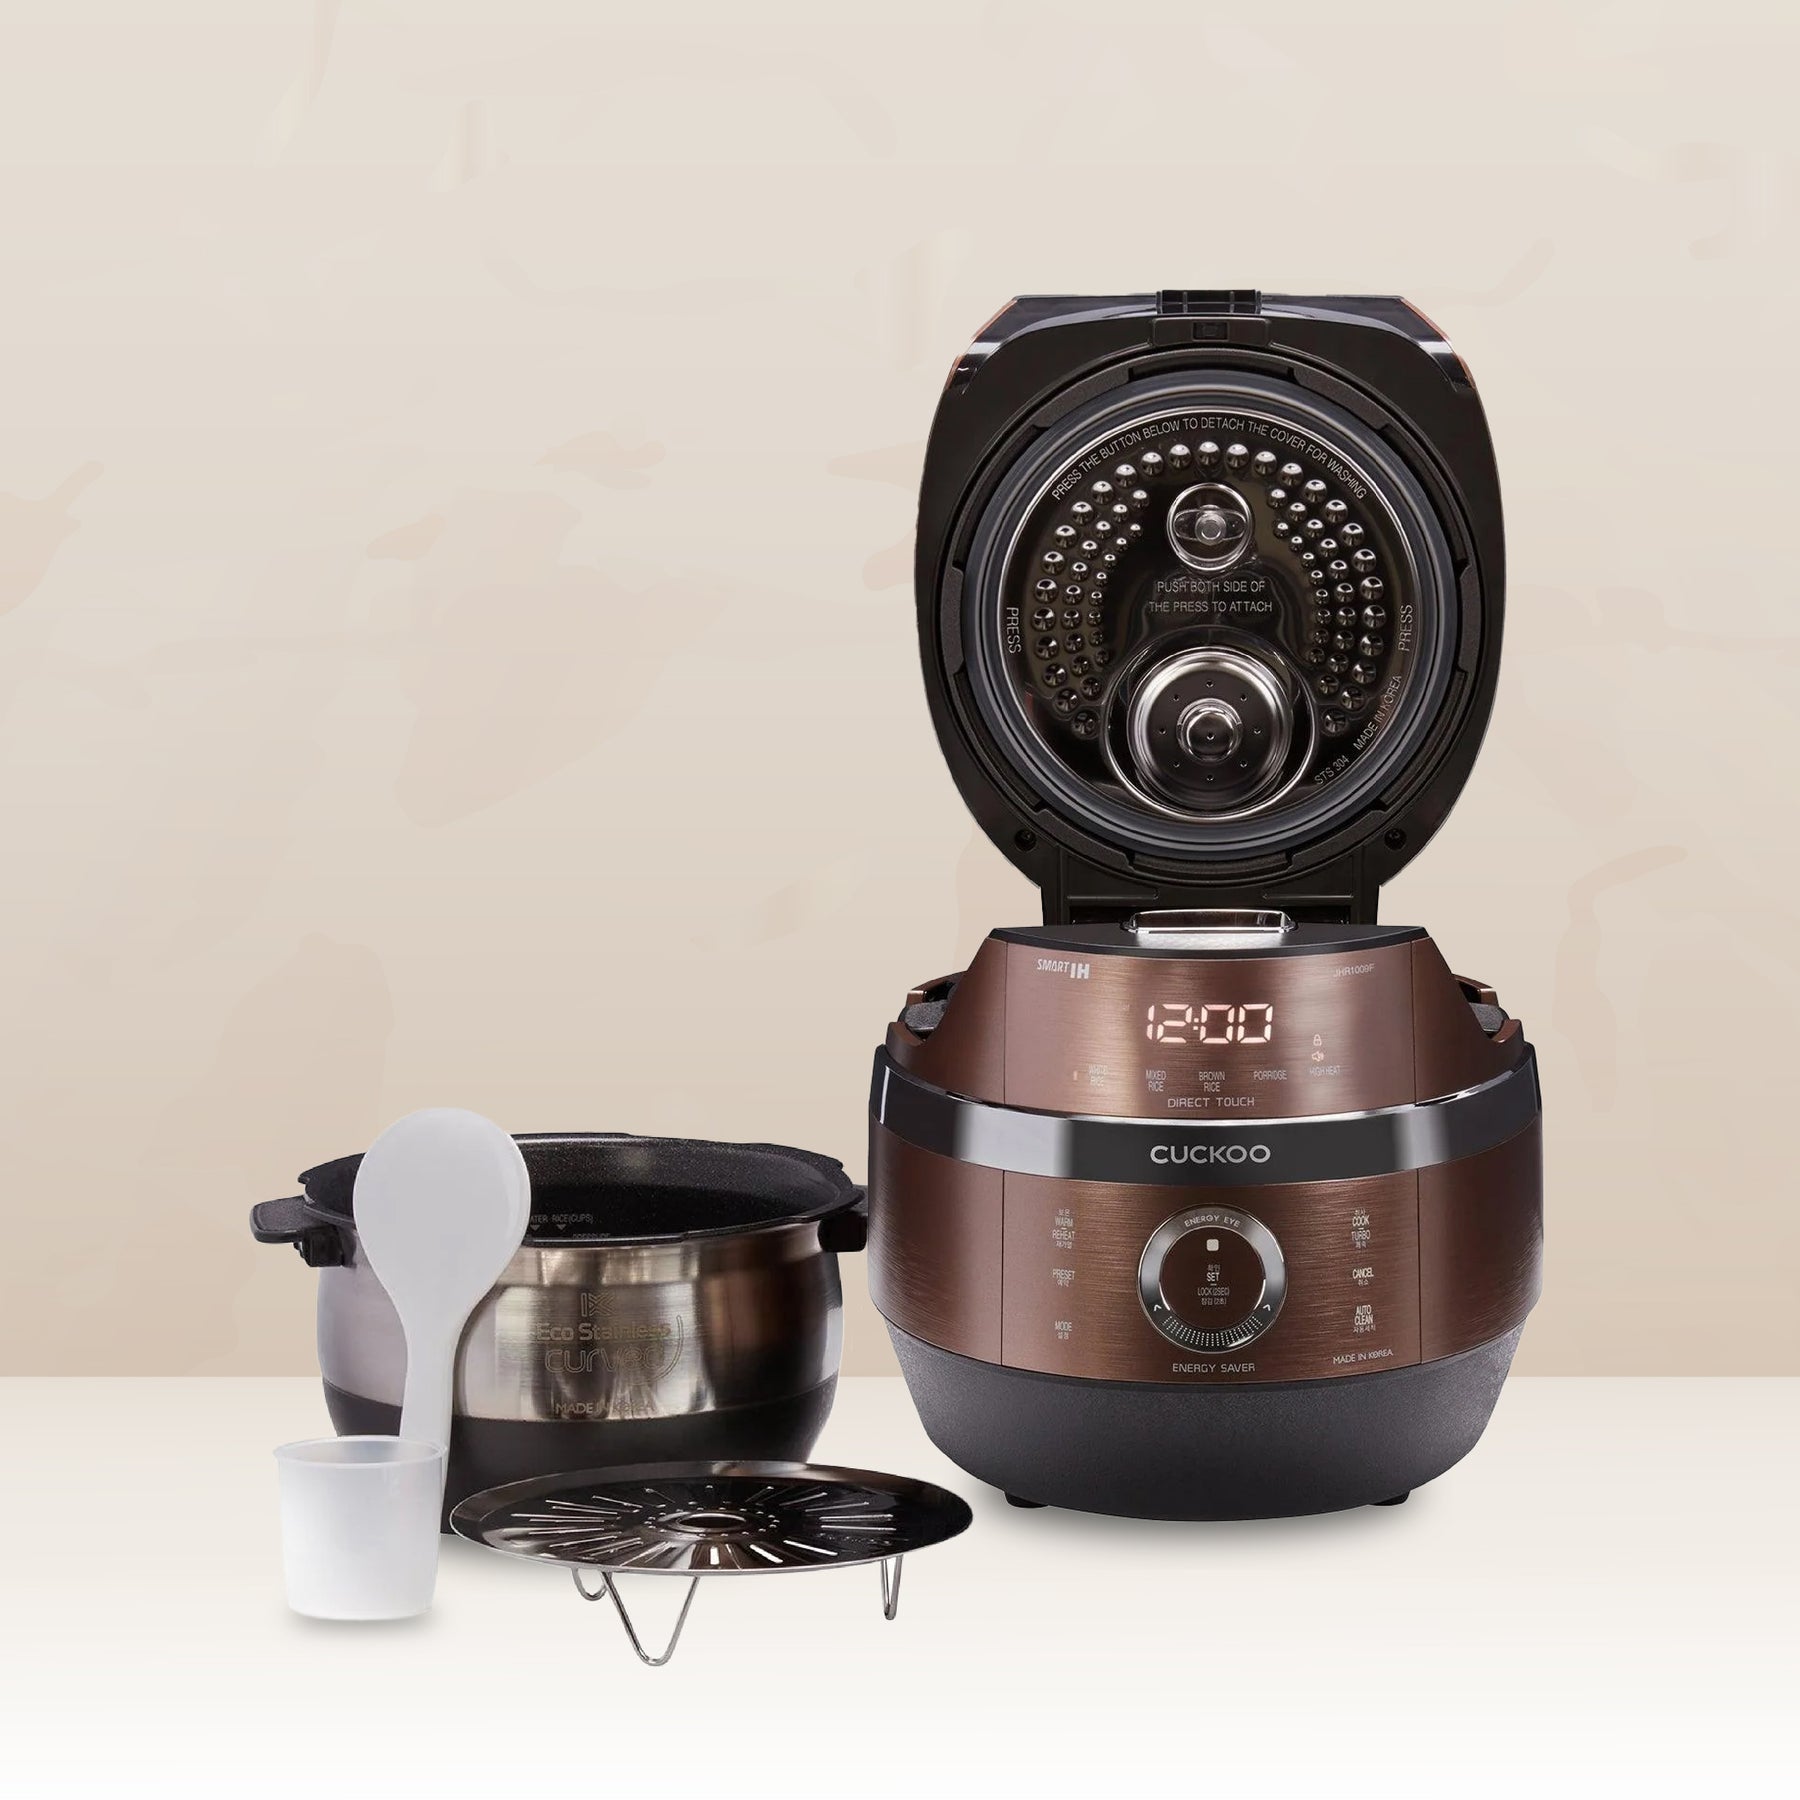 IH Pressure Rice Cooker-Browncopper/10 Cup (Crp-Jhr1009F) Cuckoo Electronics Size: 12.9 H x 13.9 W x 12 D